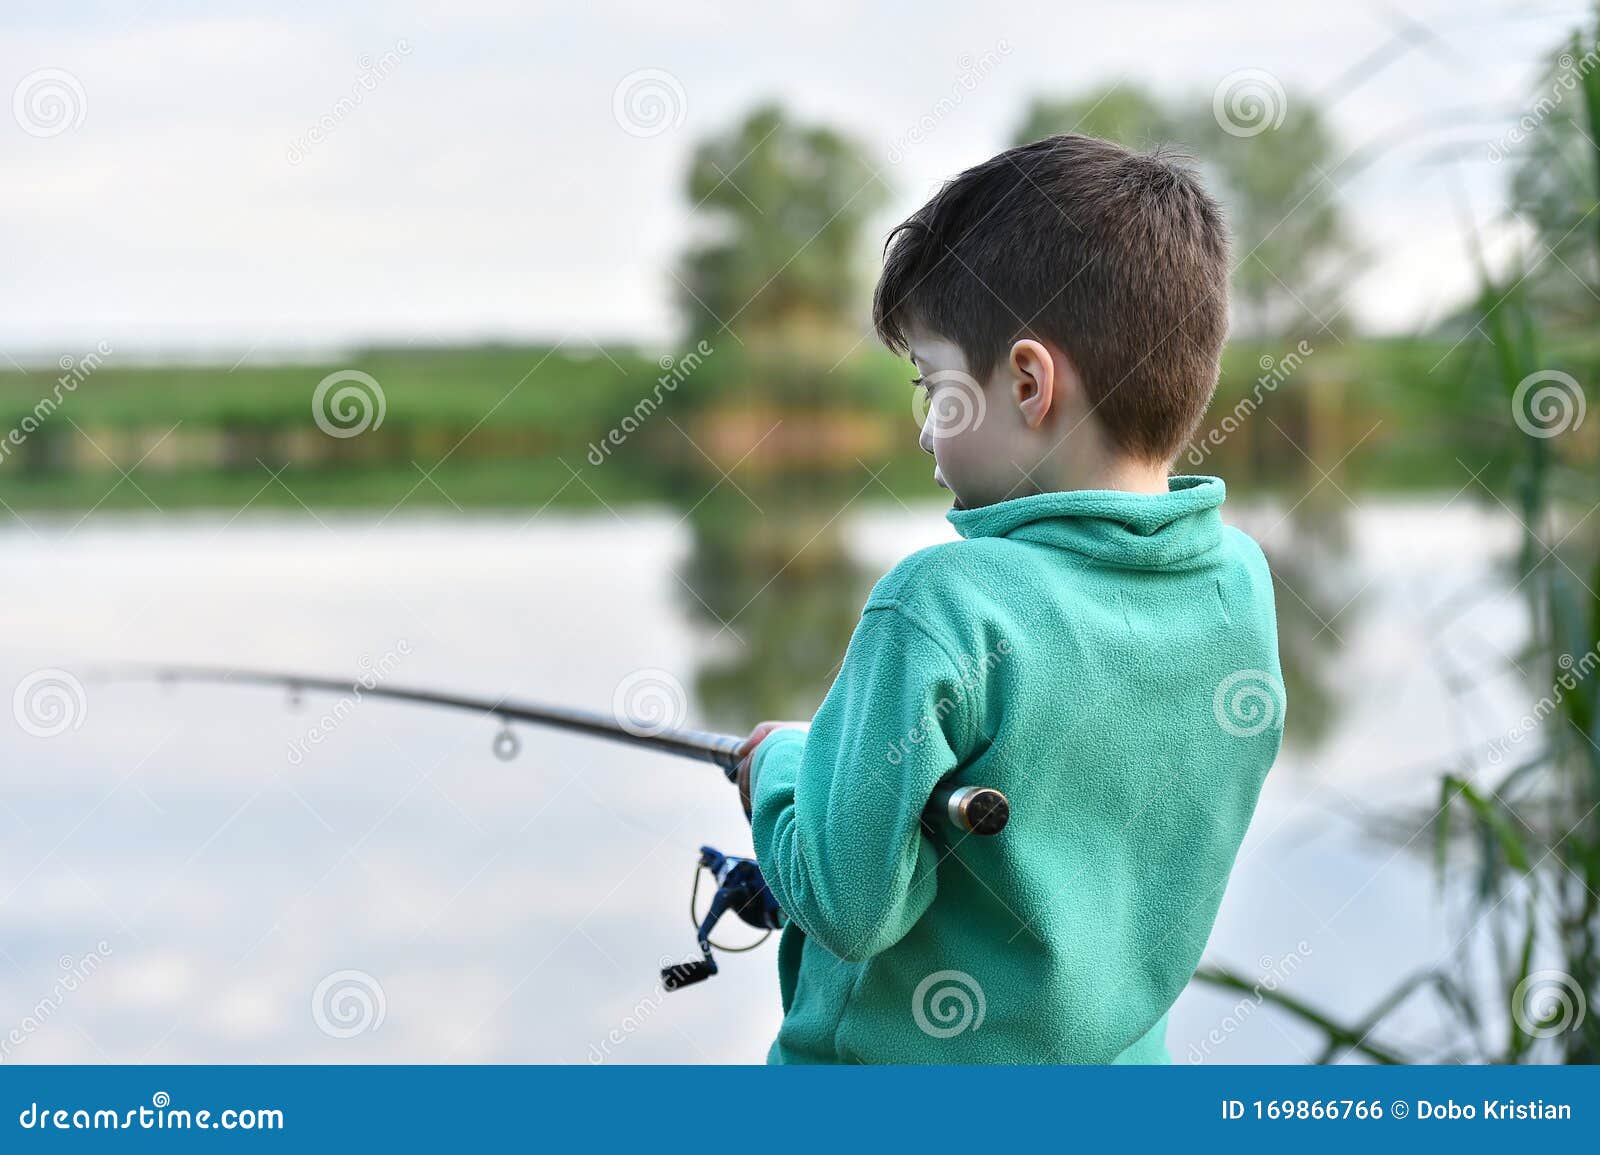 Child Boy Holds Fishing Rod Stock Photo - Image of activity, rear